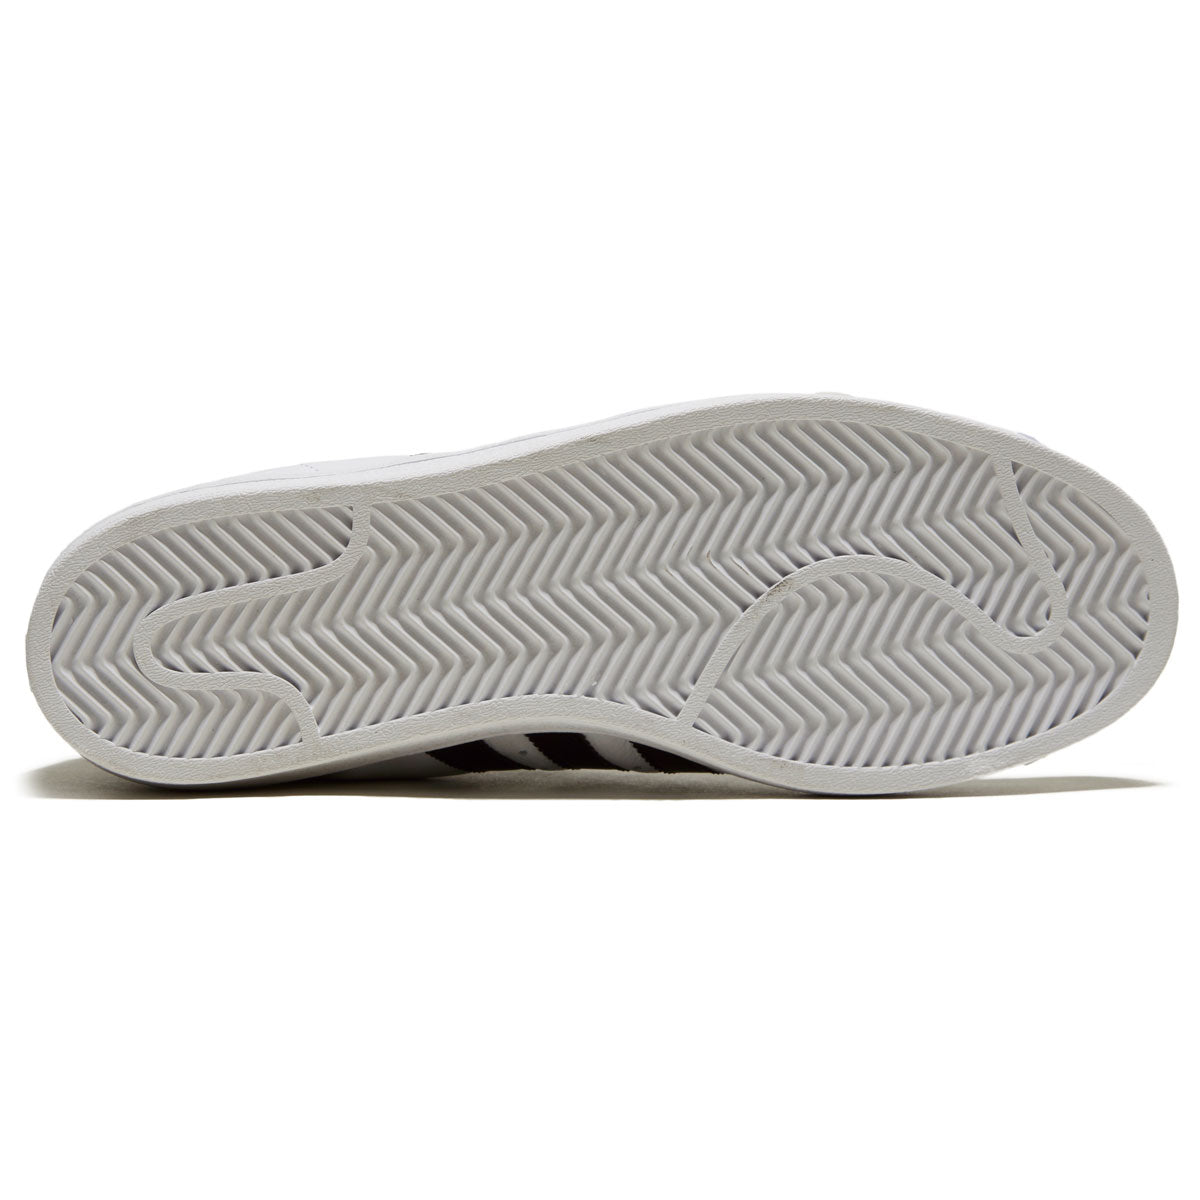 Adidas Pro Model ADV Shoes - White/Core Black/Gold Metallic image 4